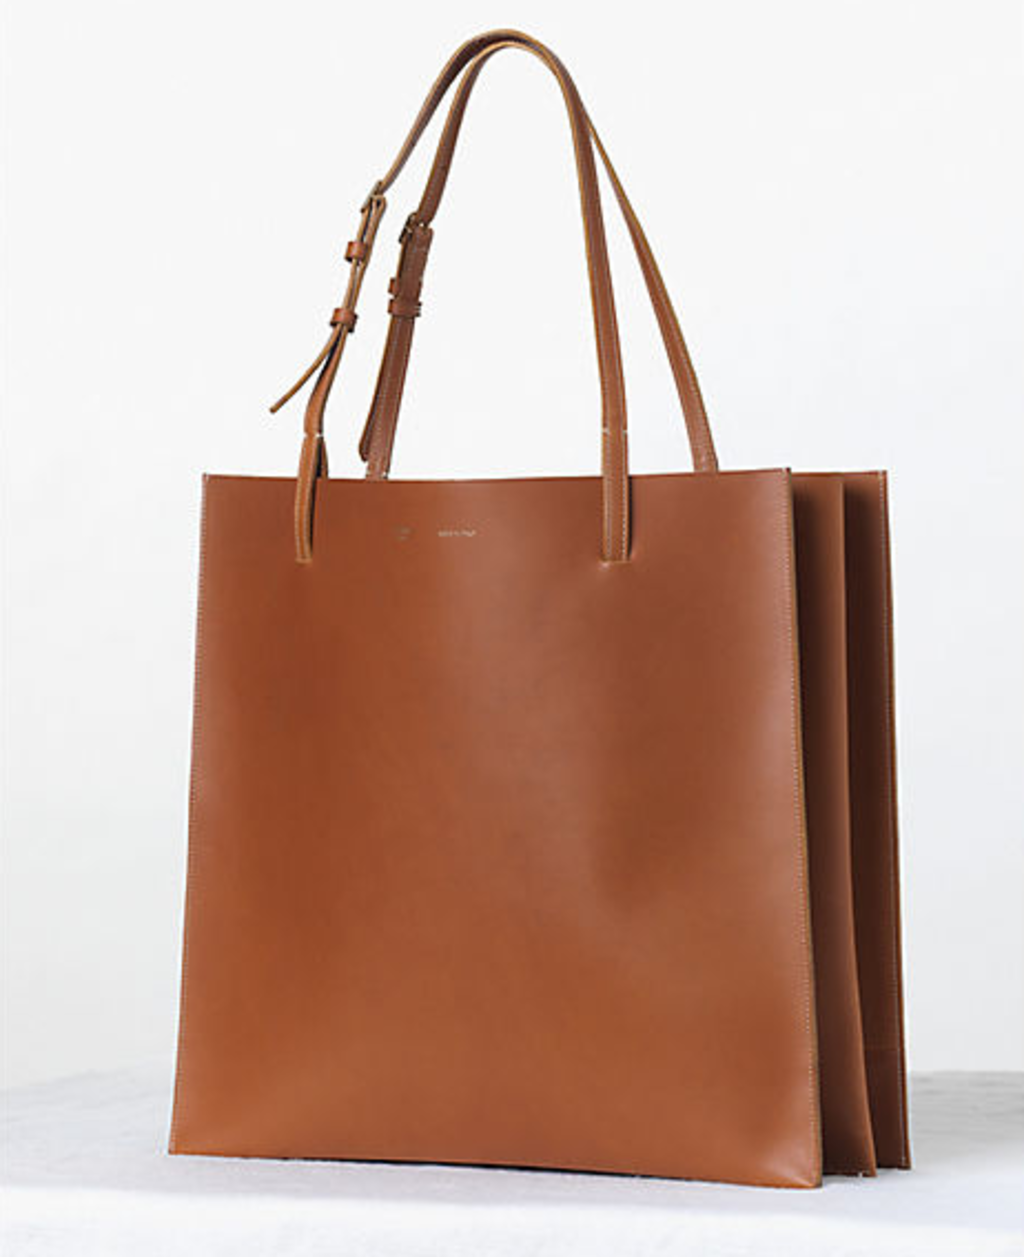 Accessorize Satchel Bags - Buy Accessorize Satchel Bags online in India